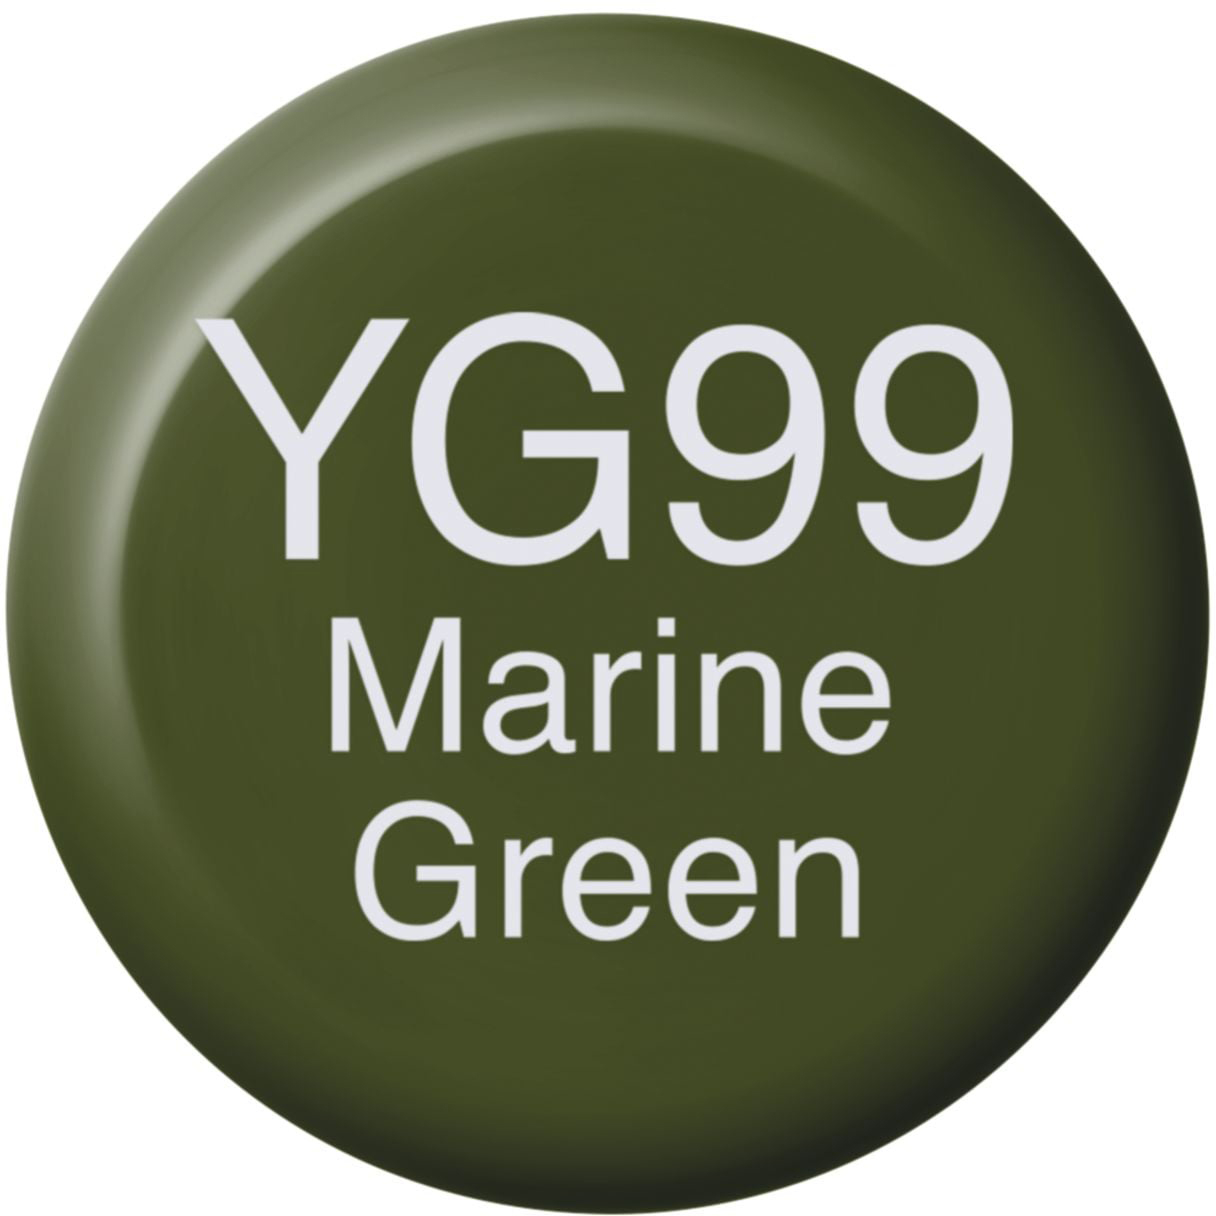 COPIC Ink Refill 2107658 YG99 - Marine Green